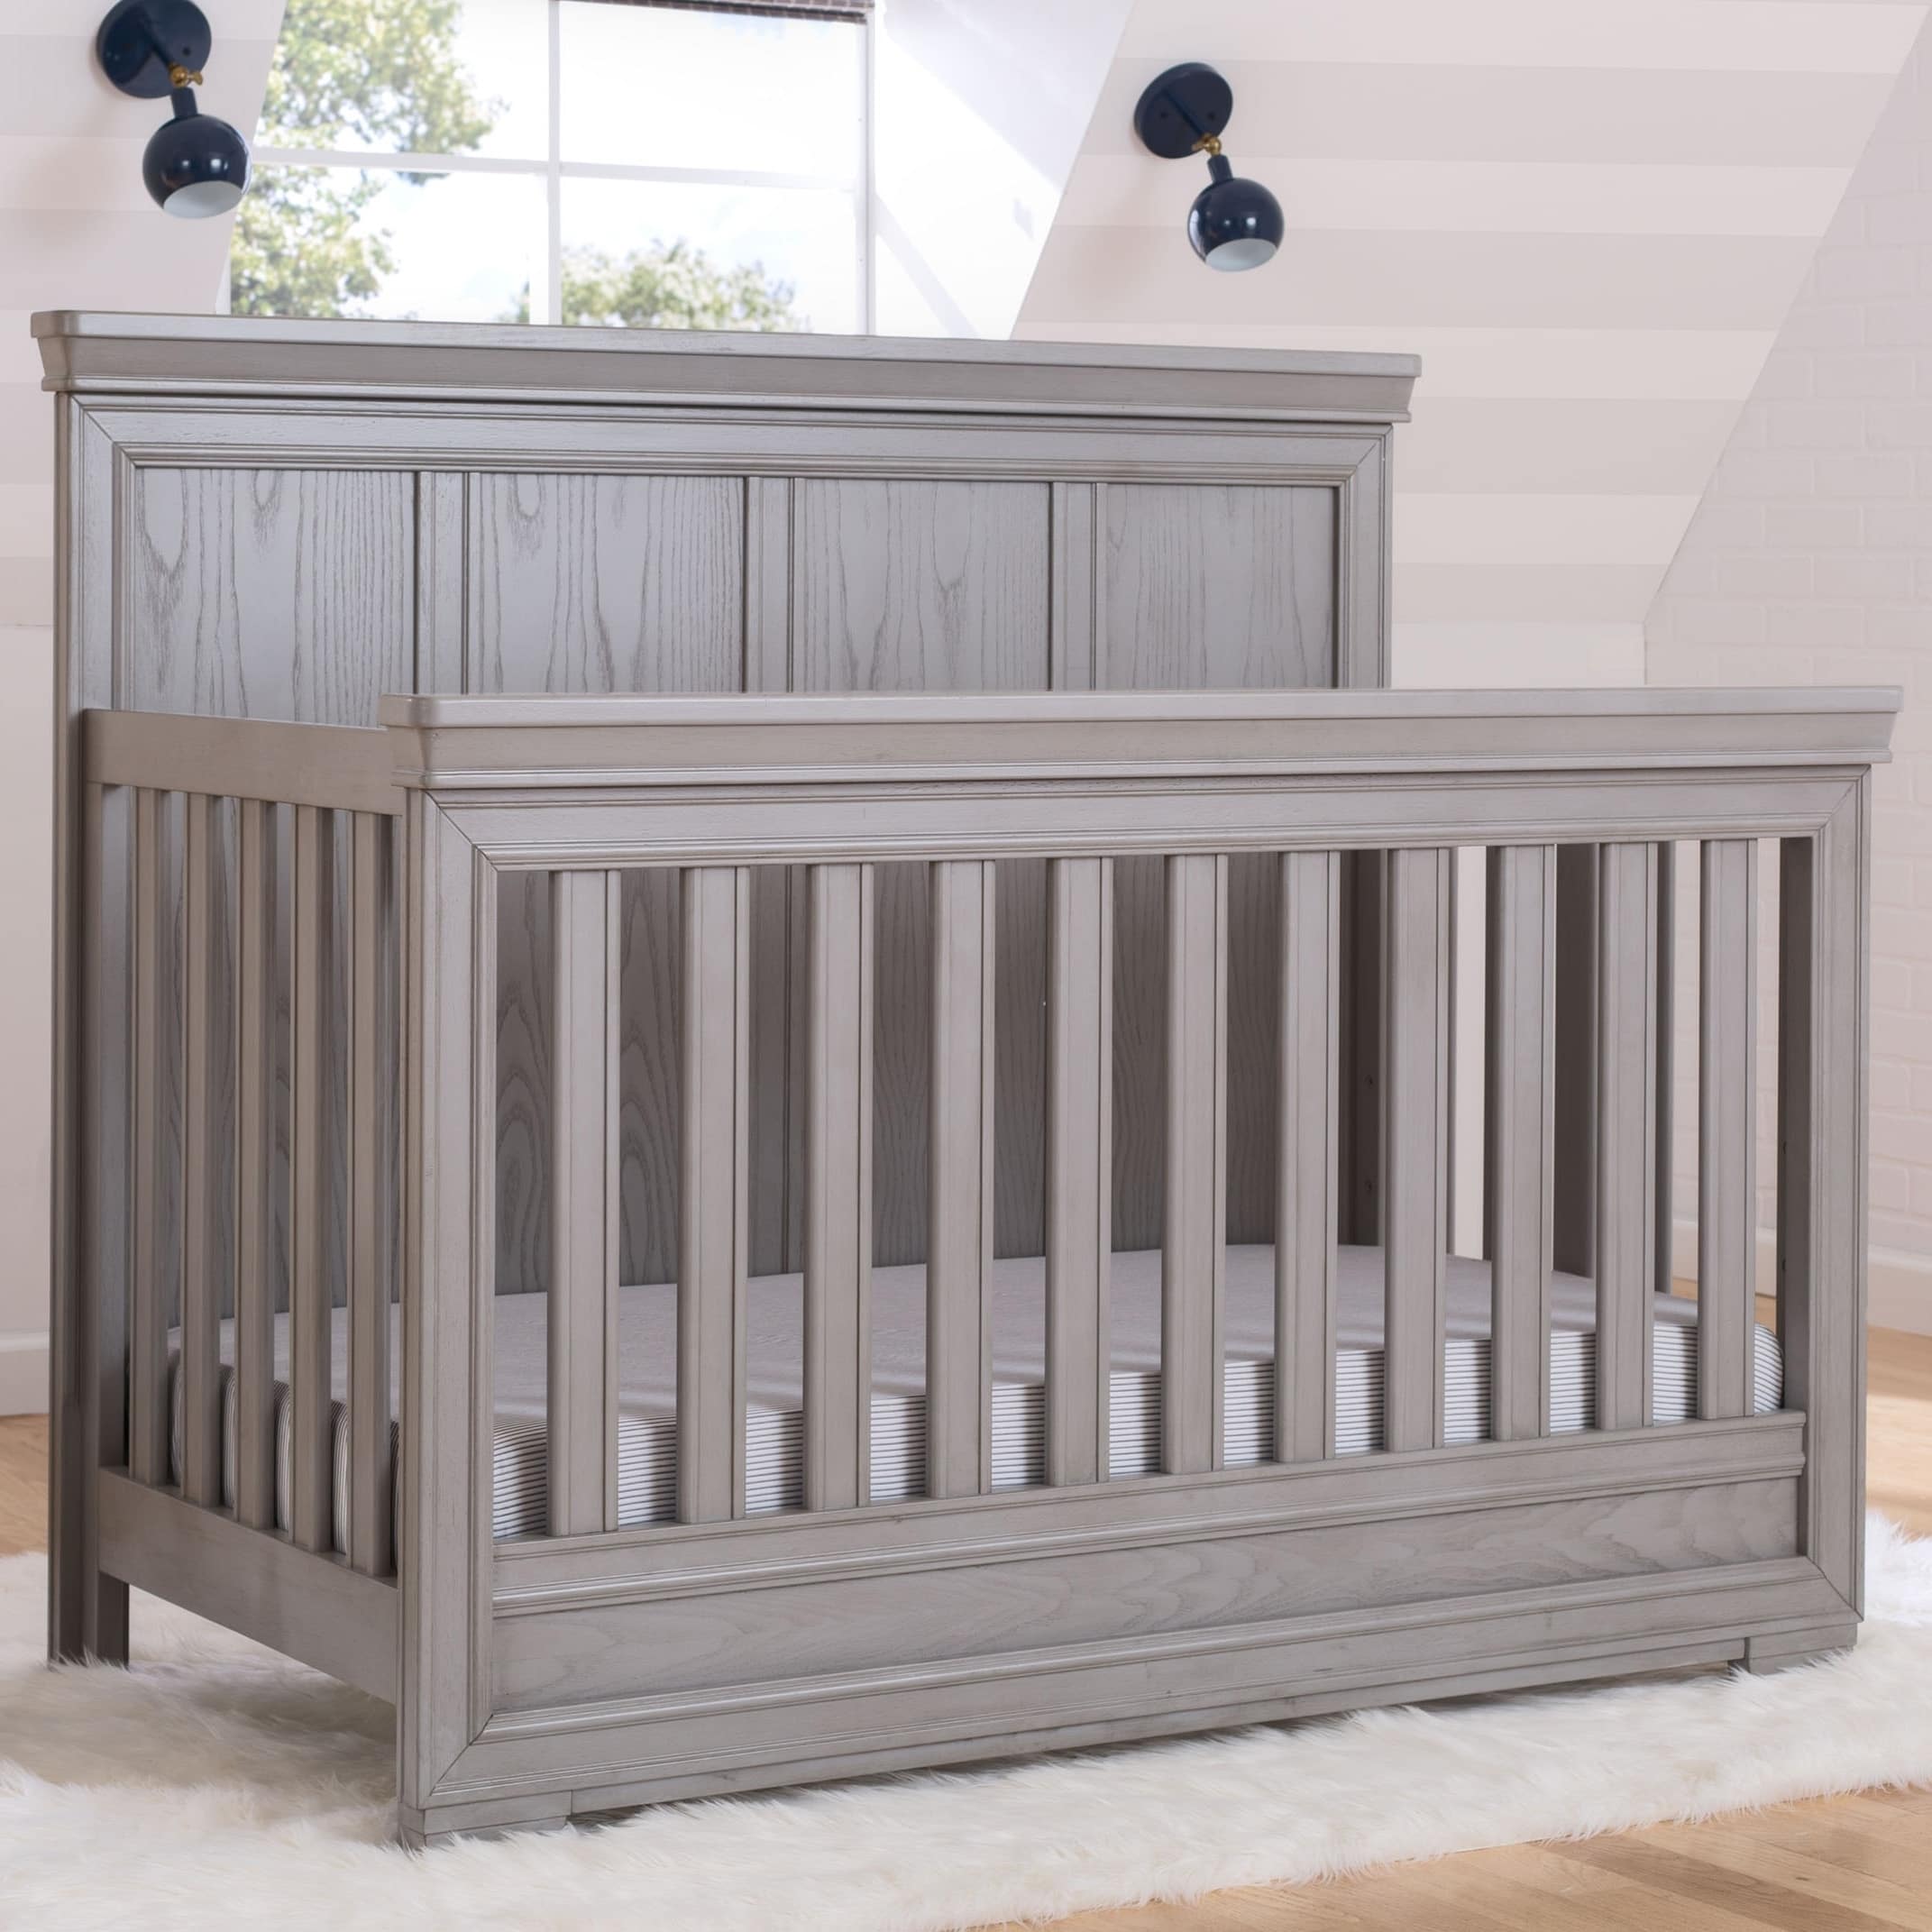 baby cribs overstock